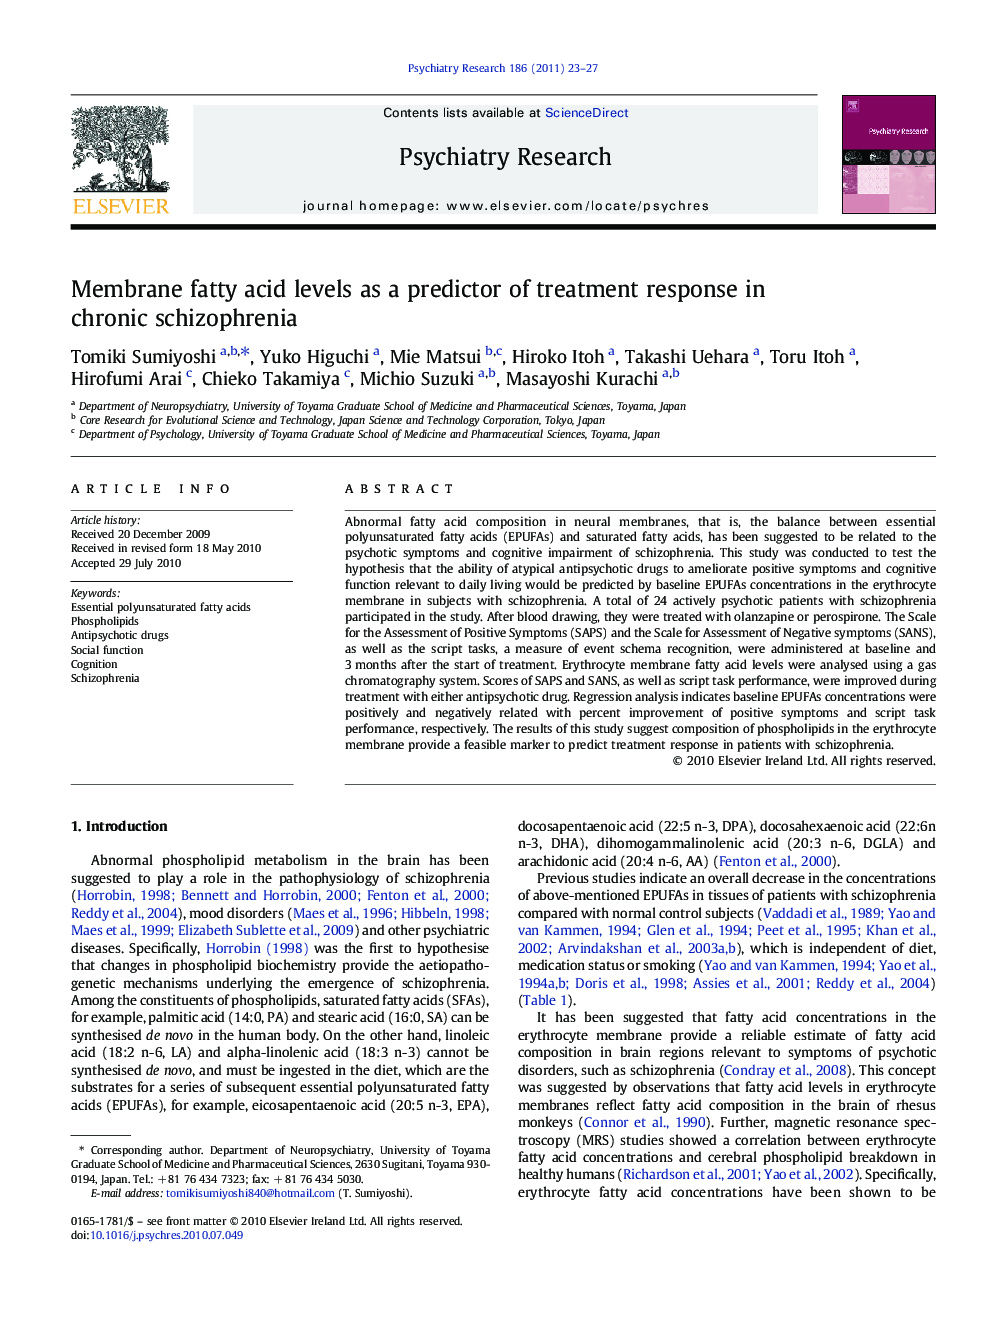 Membrane fatty acid levels as a predictor of treatment response in chronic schizophrenia